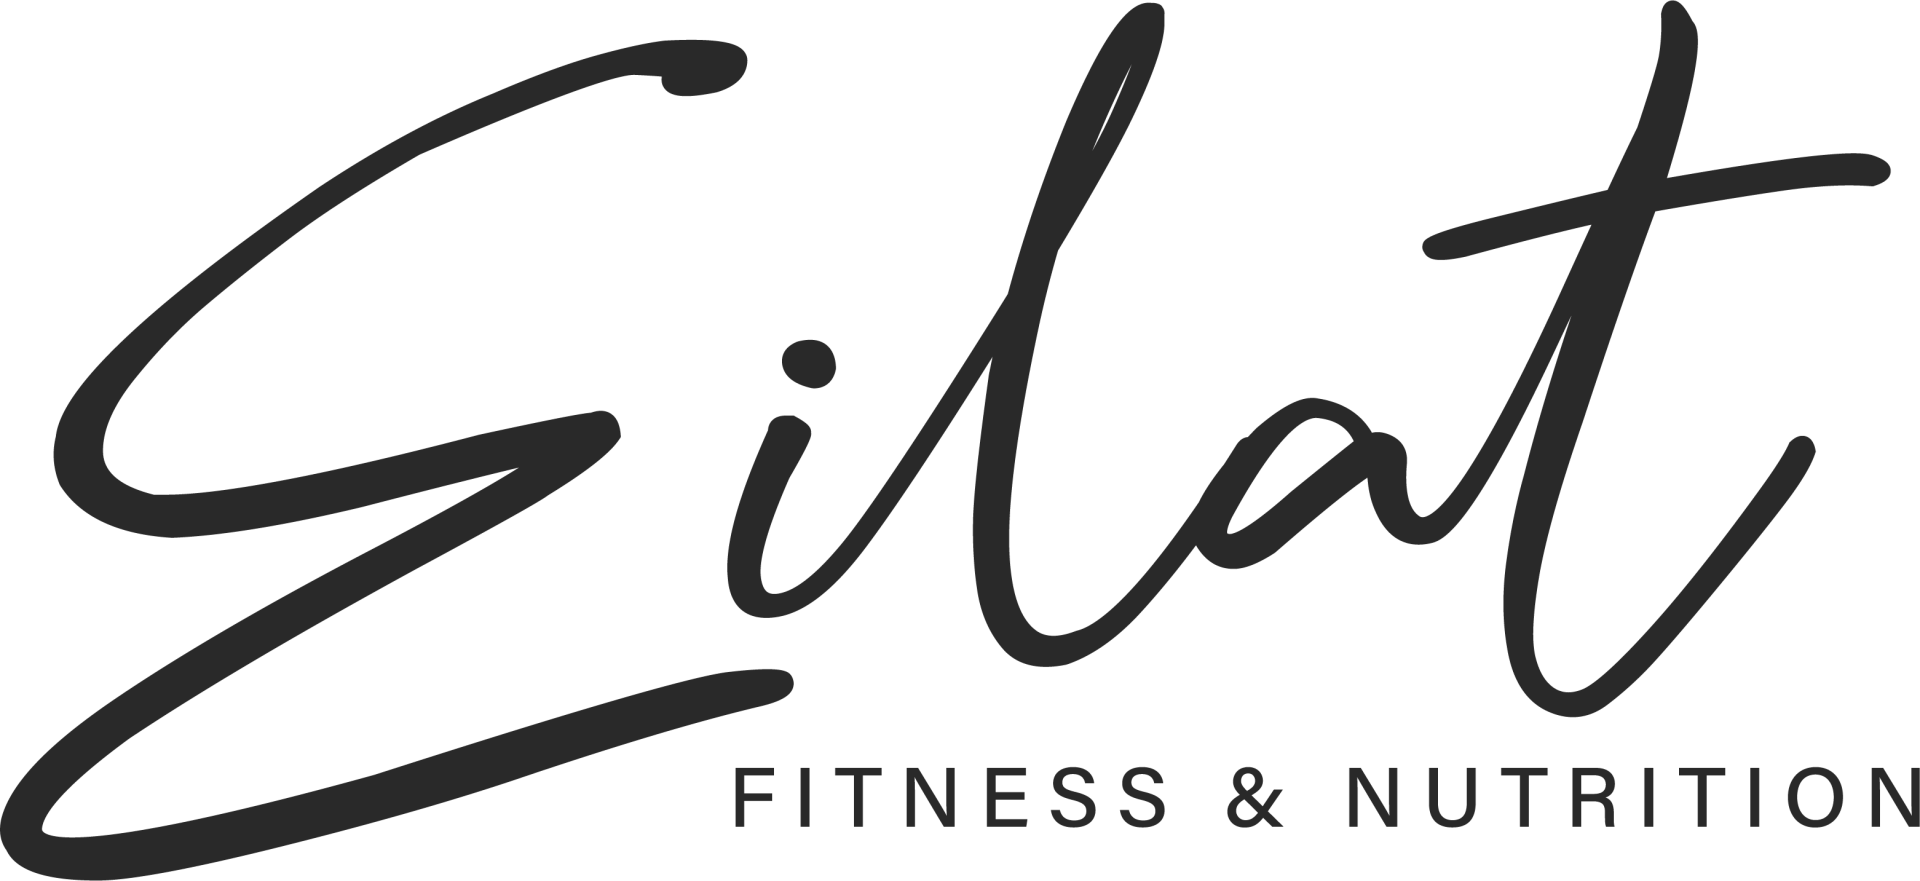 Eilat Fitness & Nutrition